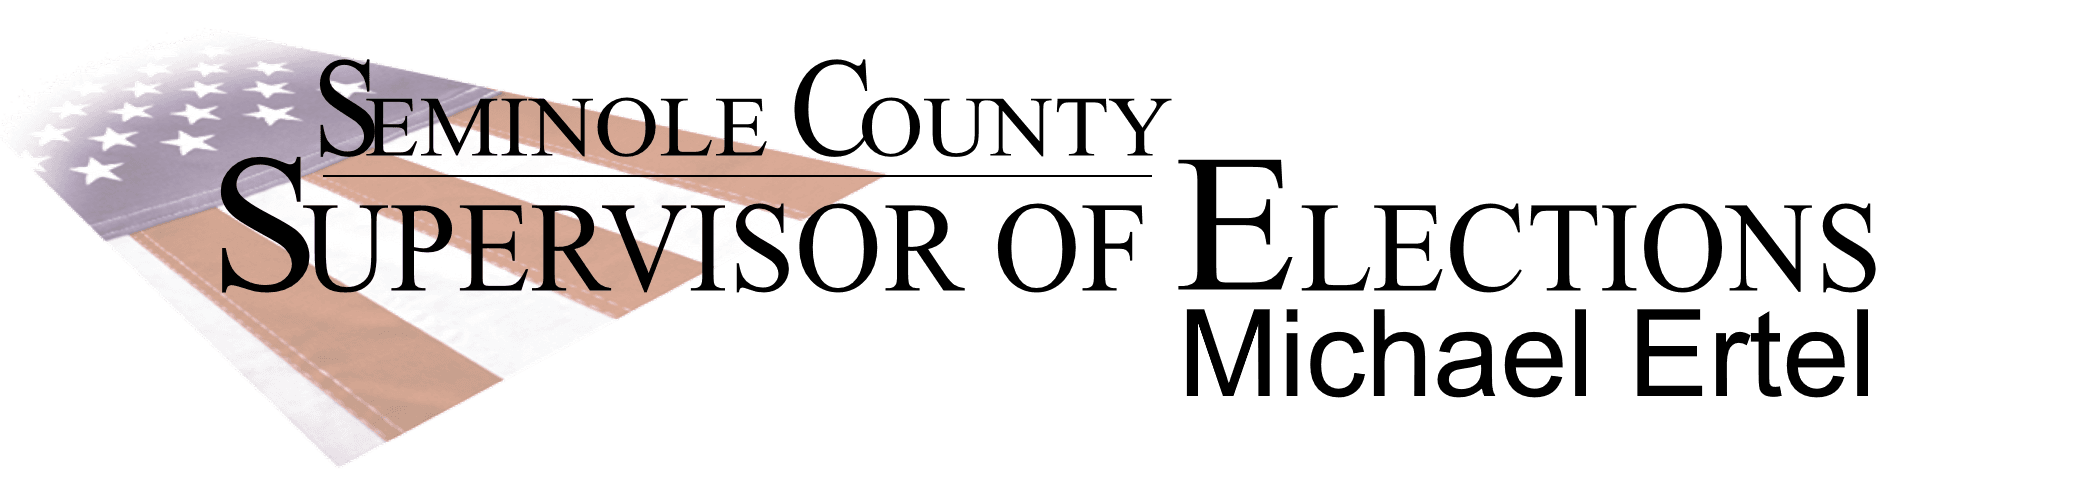 VoteSeminole logo for Seminole County Supervisor of Elections Office